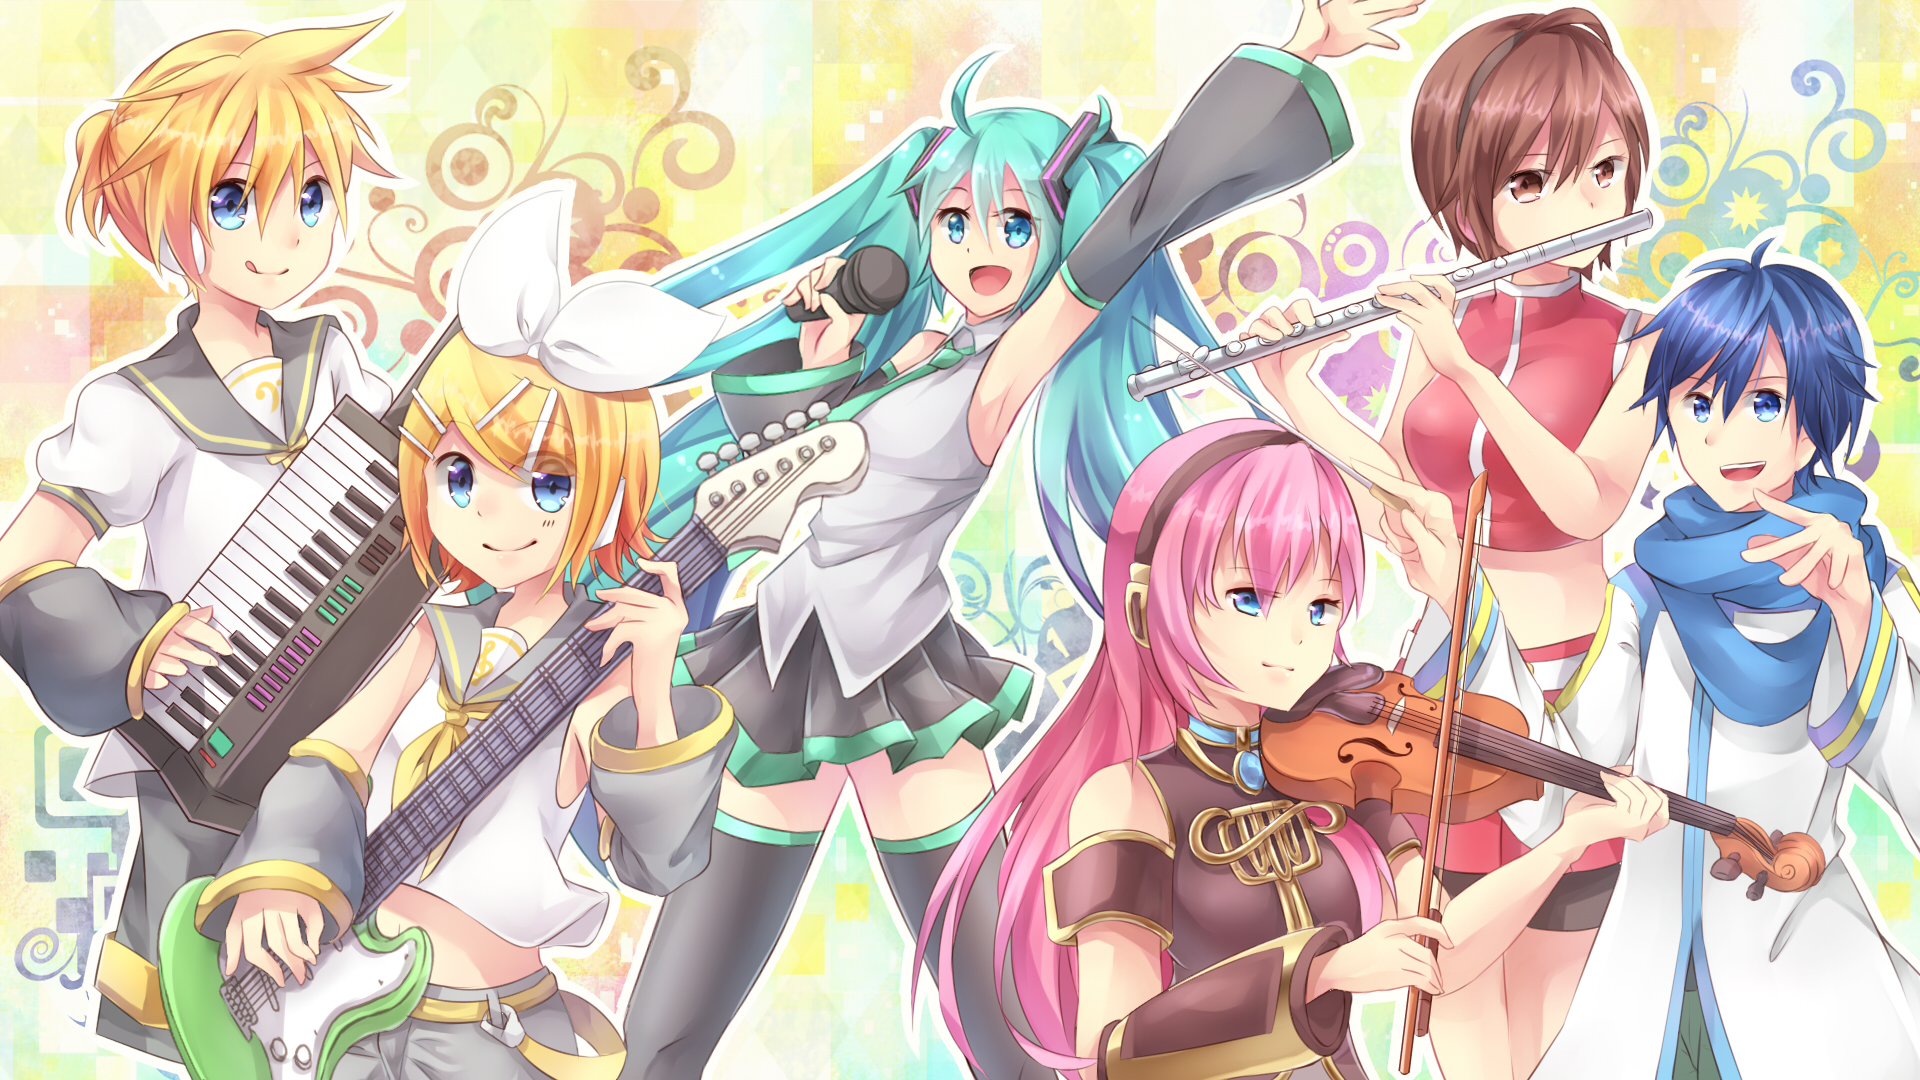 Descarga gratis la imagen Vocaloid, Luka Megurine, Animado, Hatsune Miku, Rin Kagamine, Kaito (Vocaloid), Len Kagamine, Meiko (Vocaloid) en el escritorio de tu PC